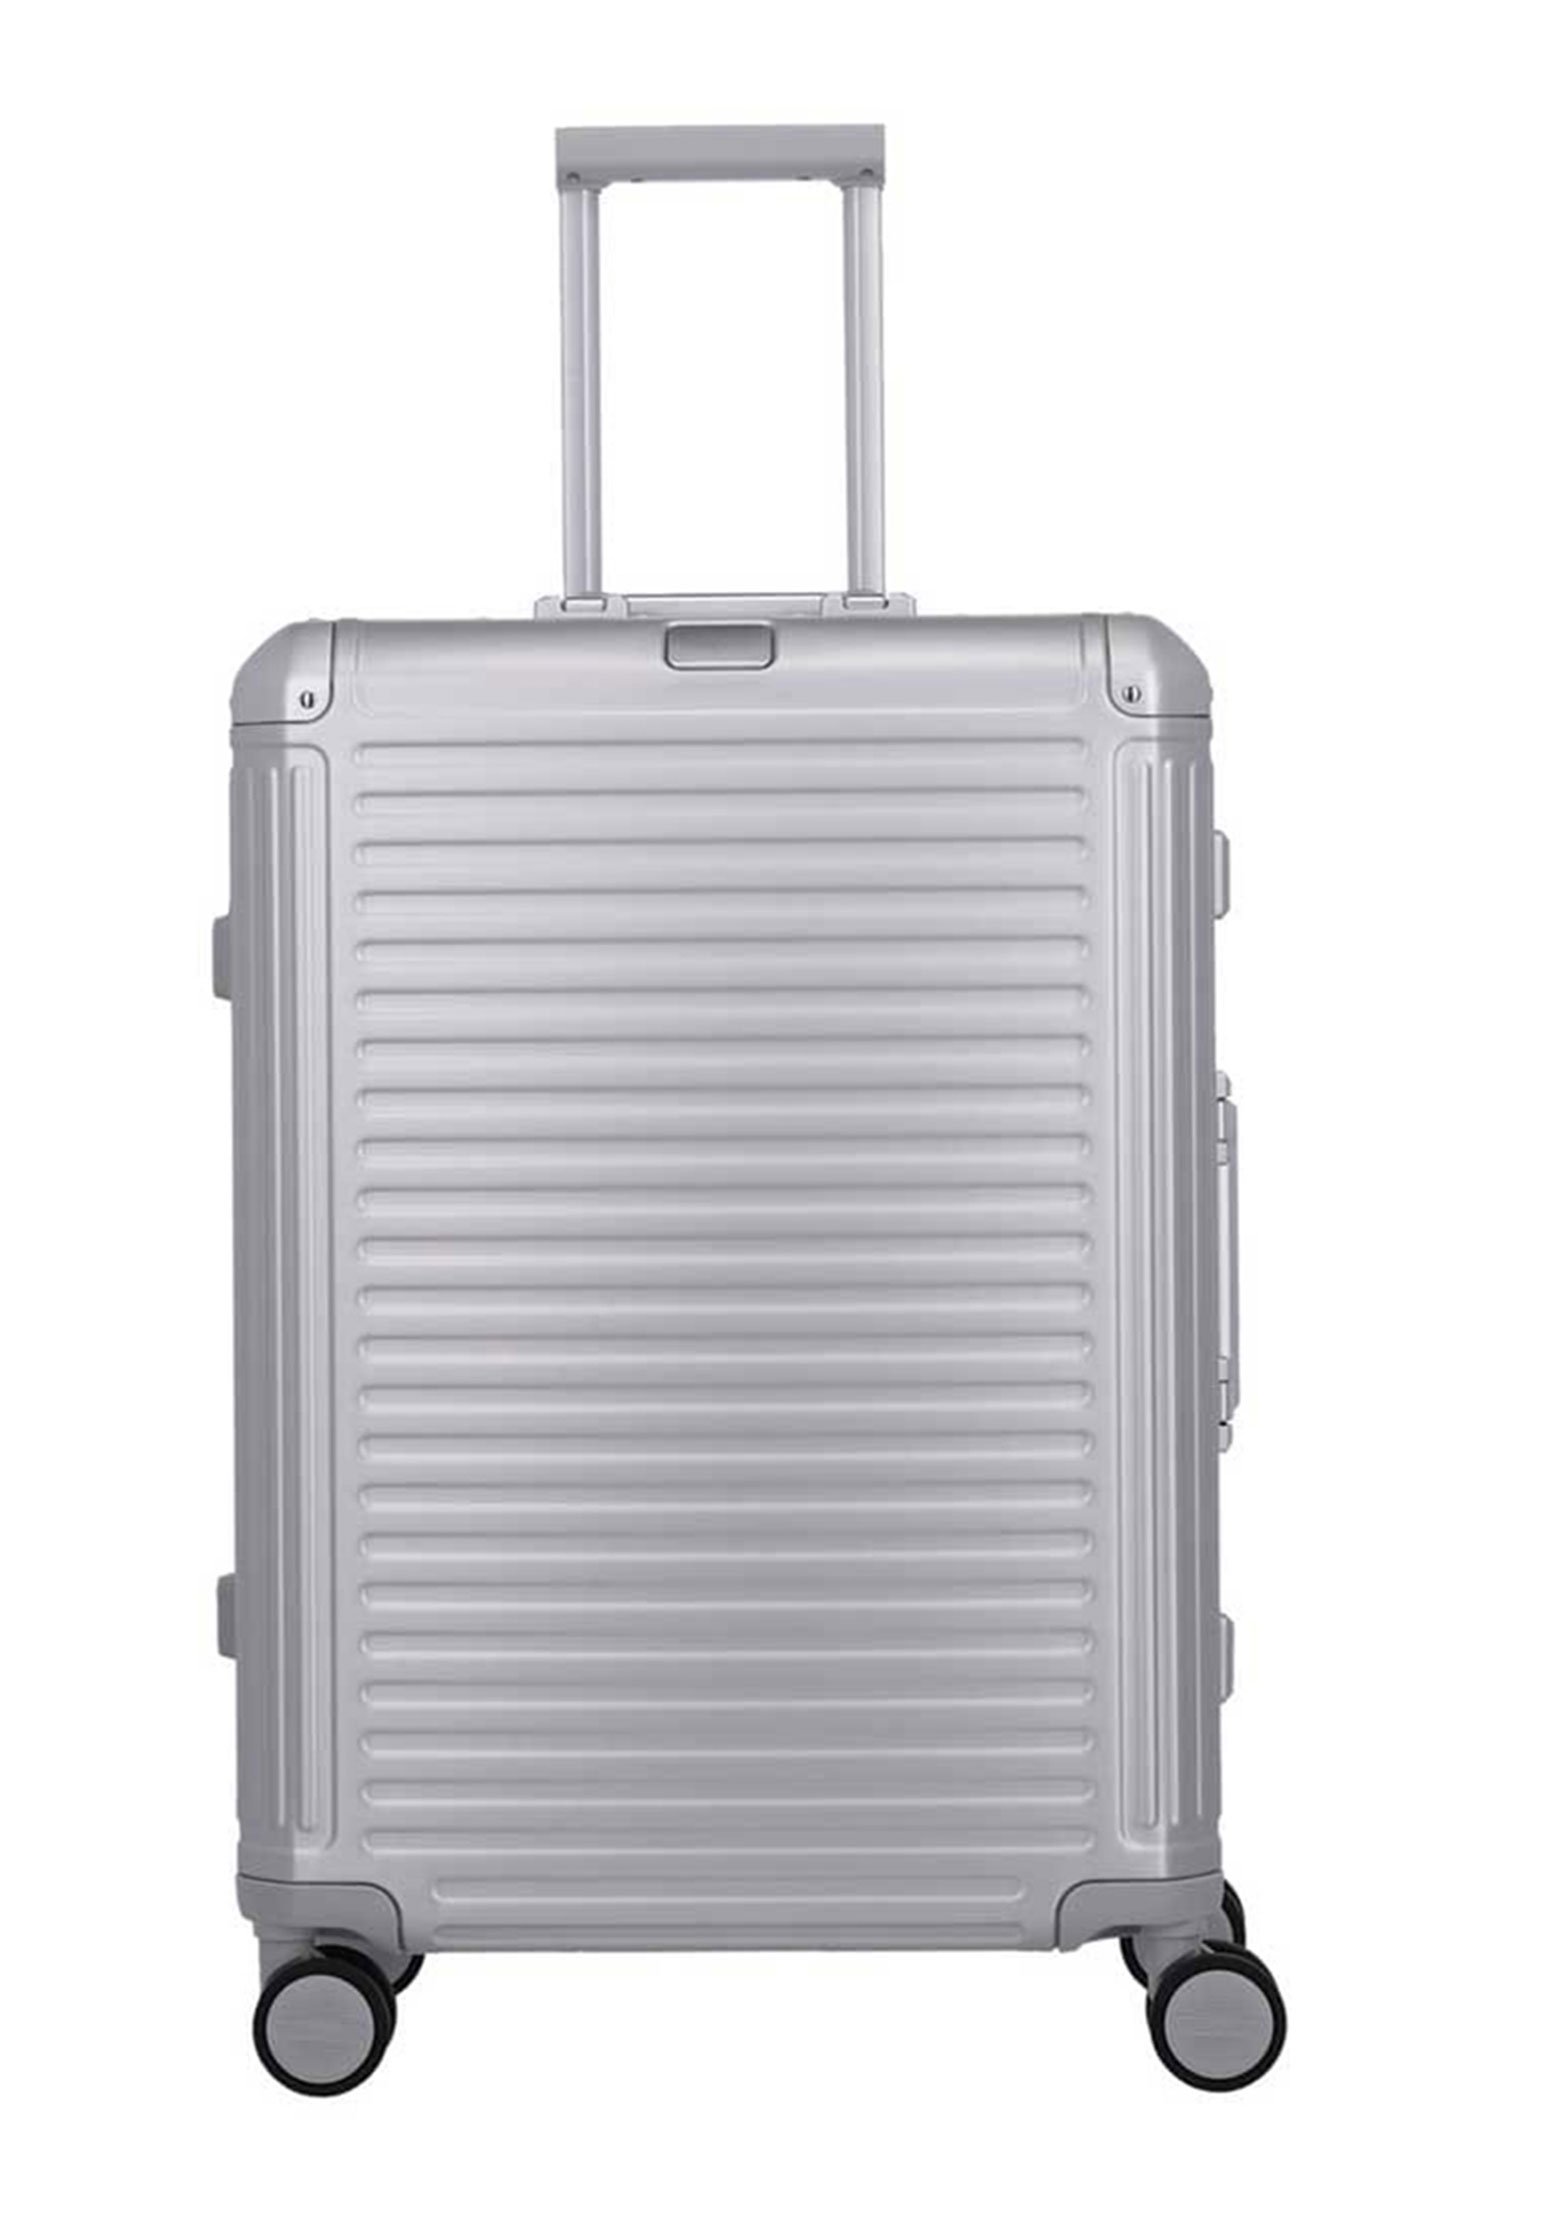 Bag TRAVELITE Color: silver (Code: 3402) in online store Allure